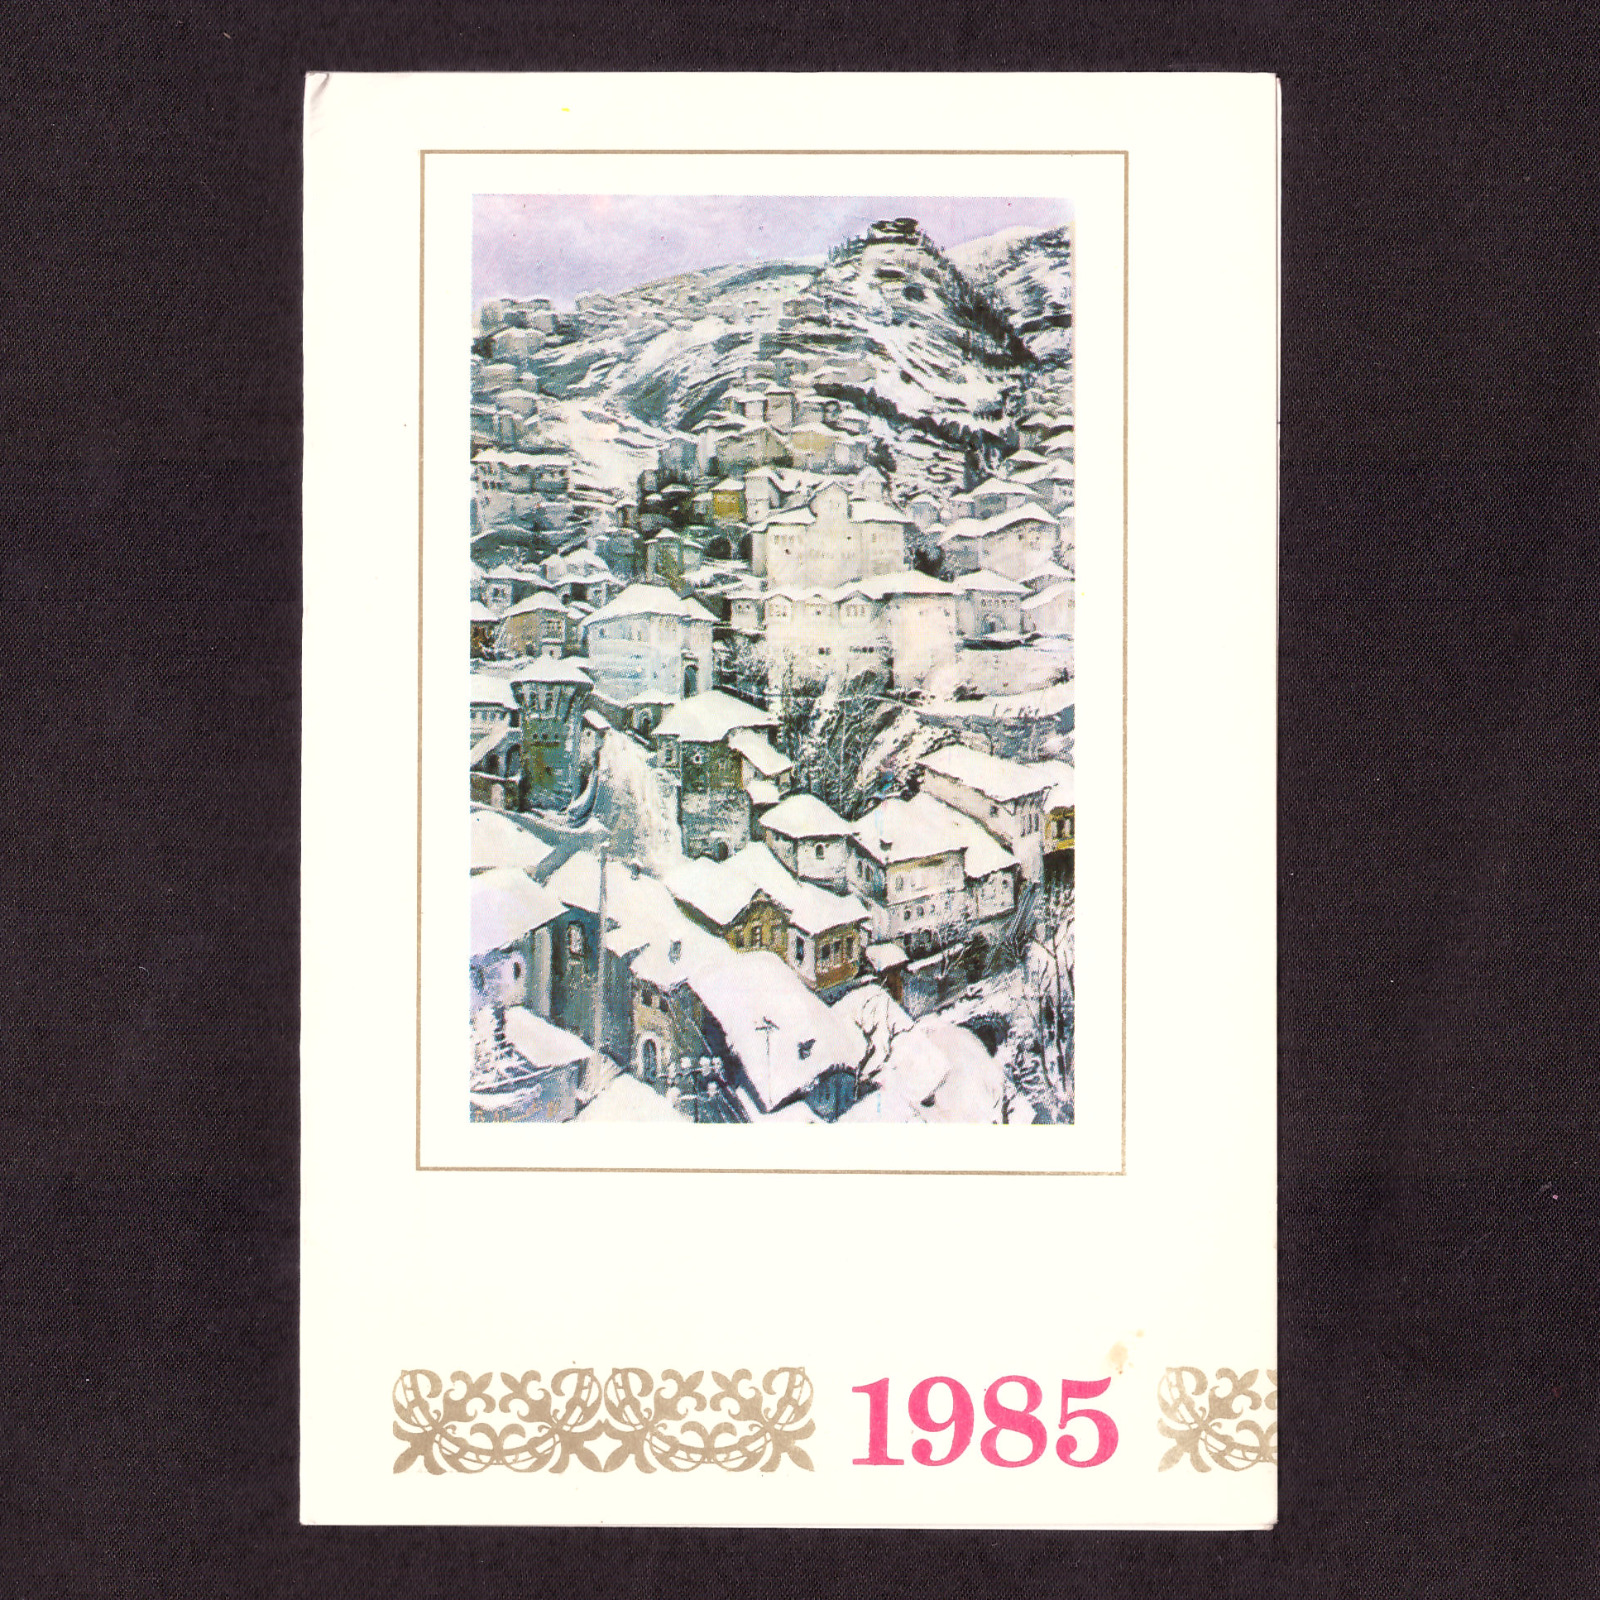 Albania Vintage Period of Communism Greetings Card 1985 Used - 002404